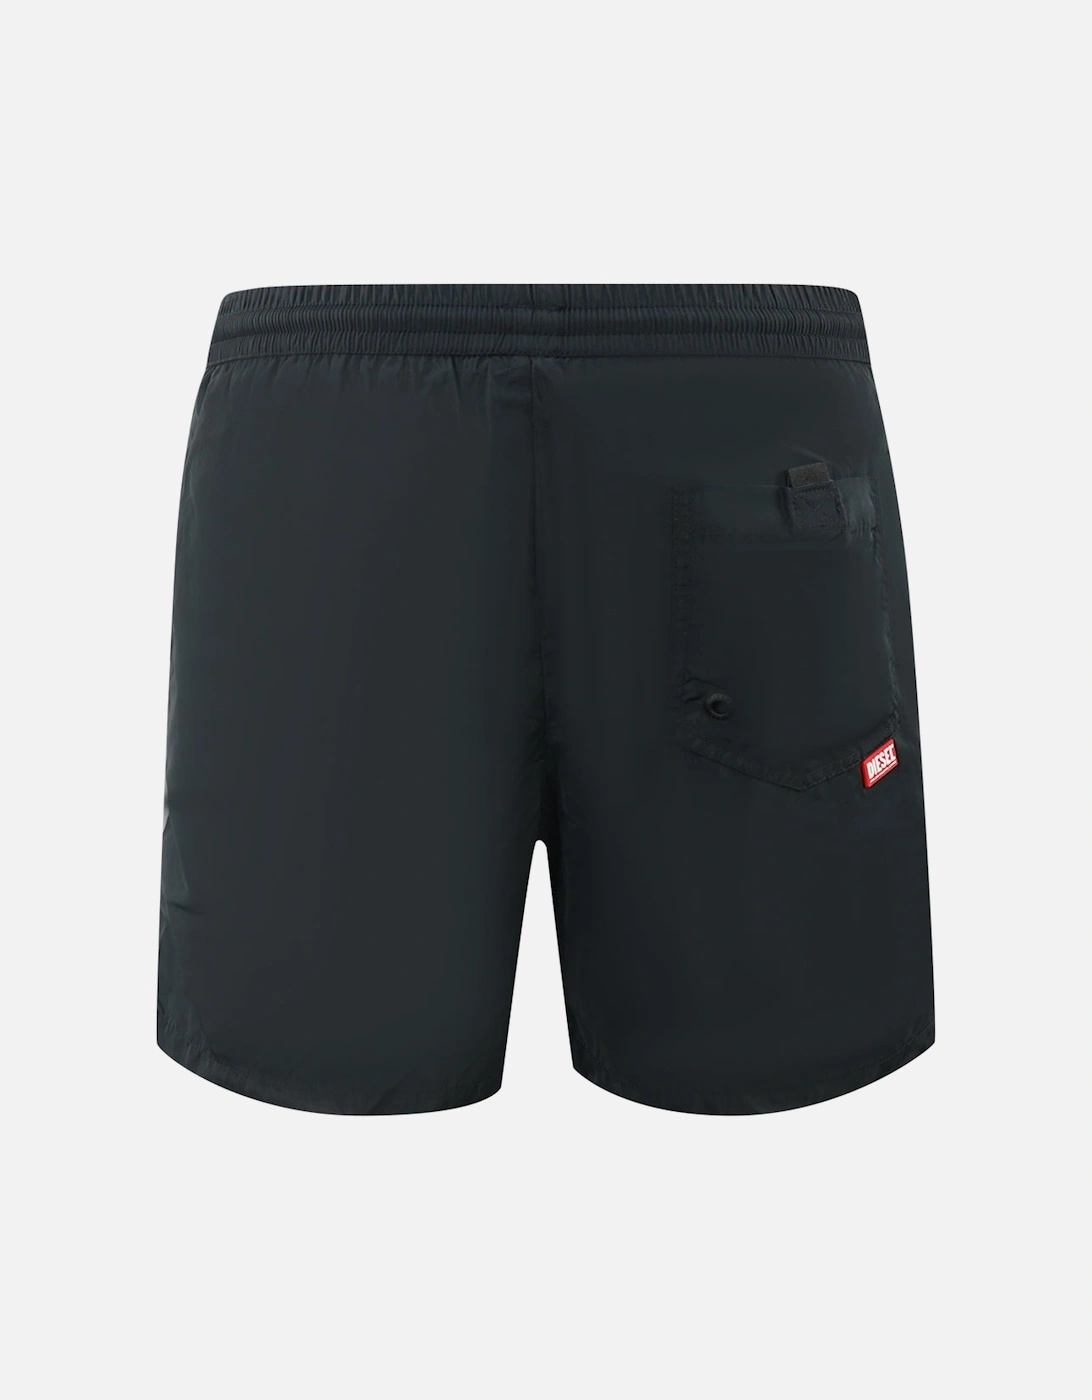 BMBX-Caybay-X 2.017 0QEAP Black Swim Shorts